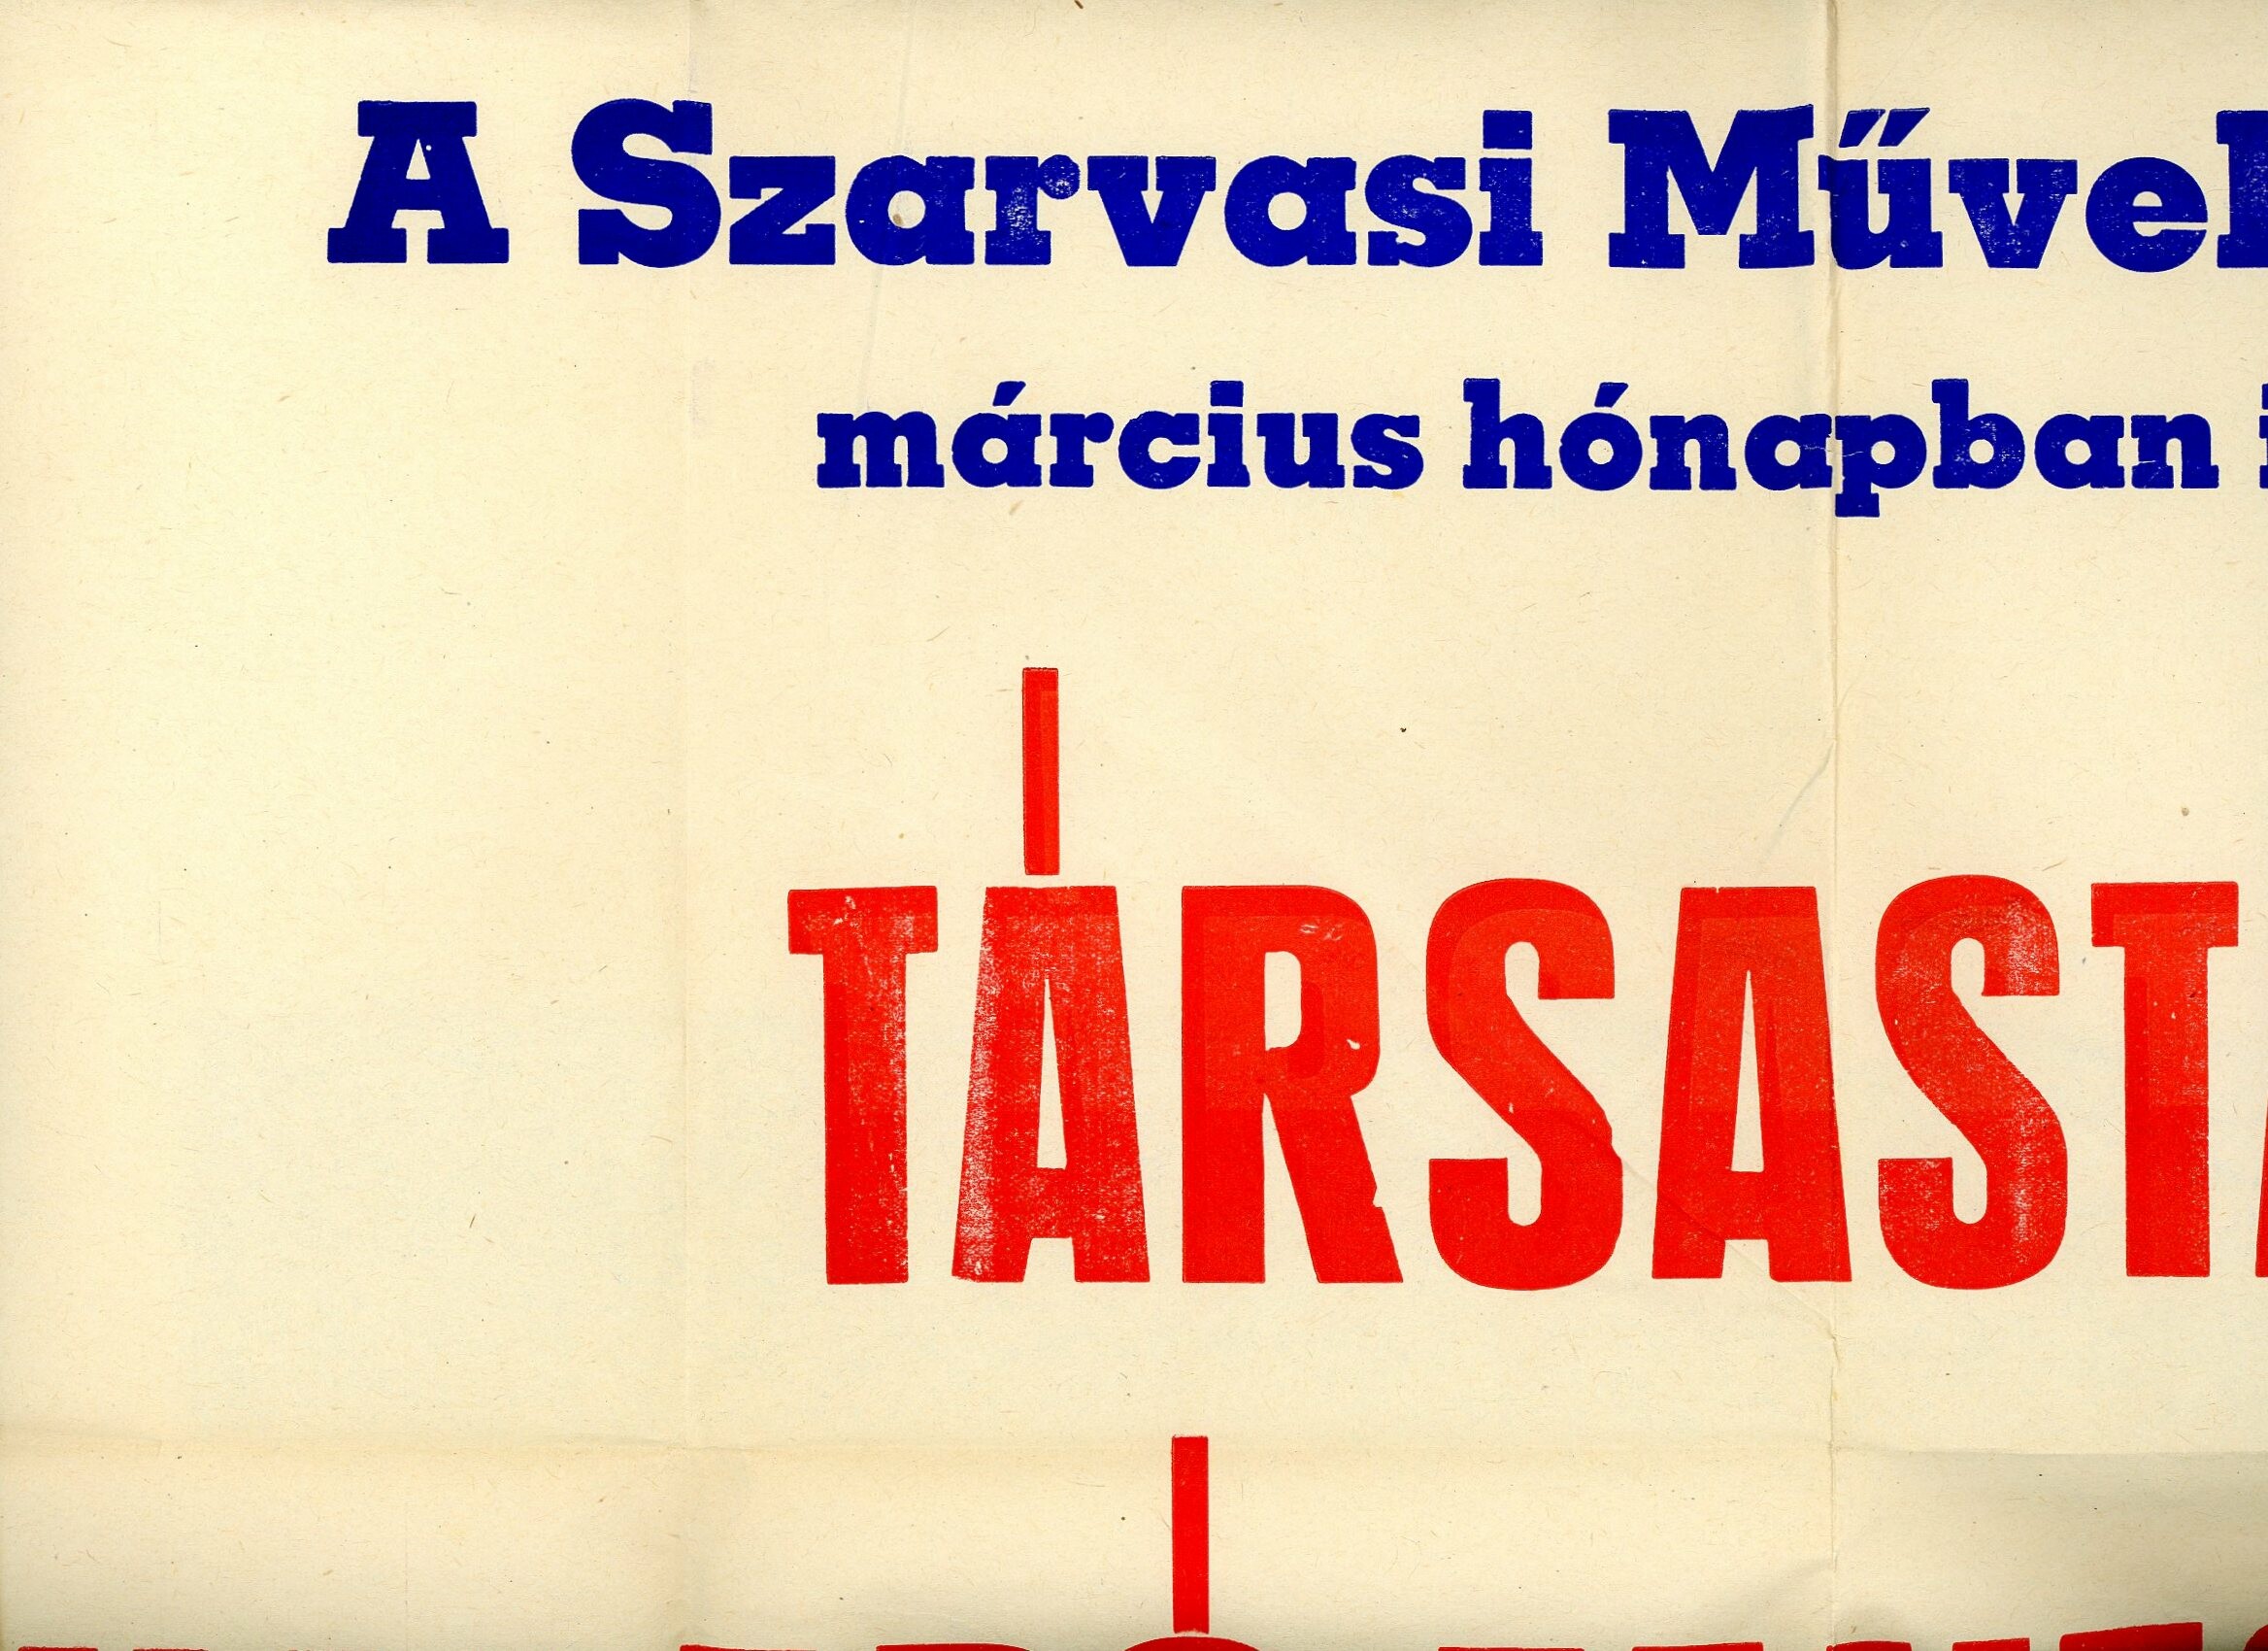 Plakát (Erkel Ferenc Múzeum CC BY-NC-SA)